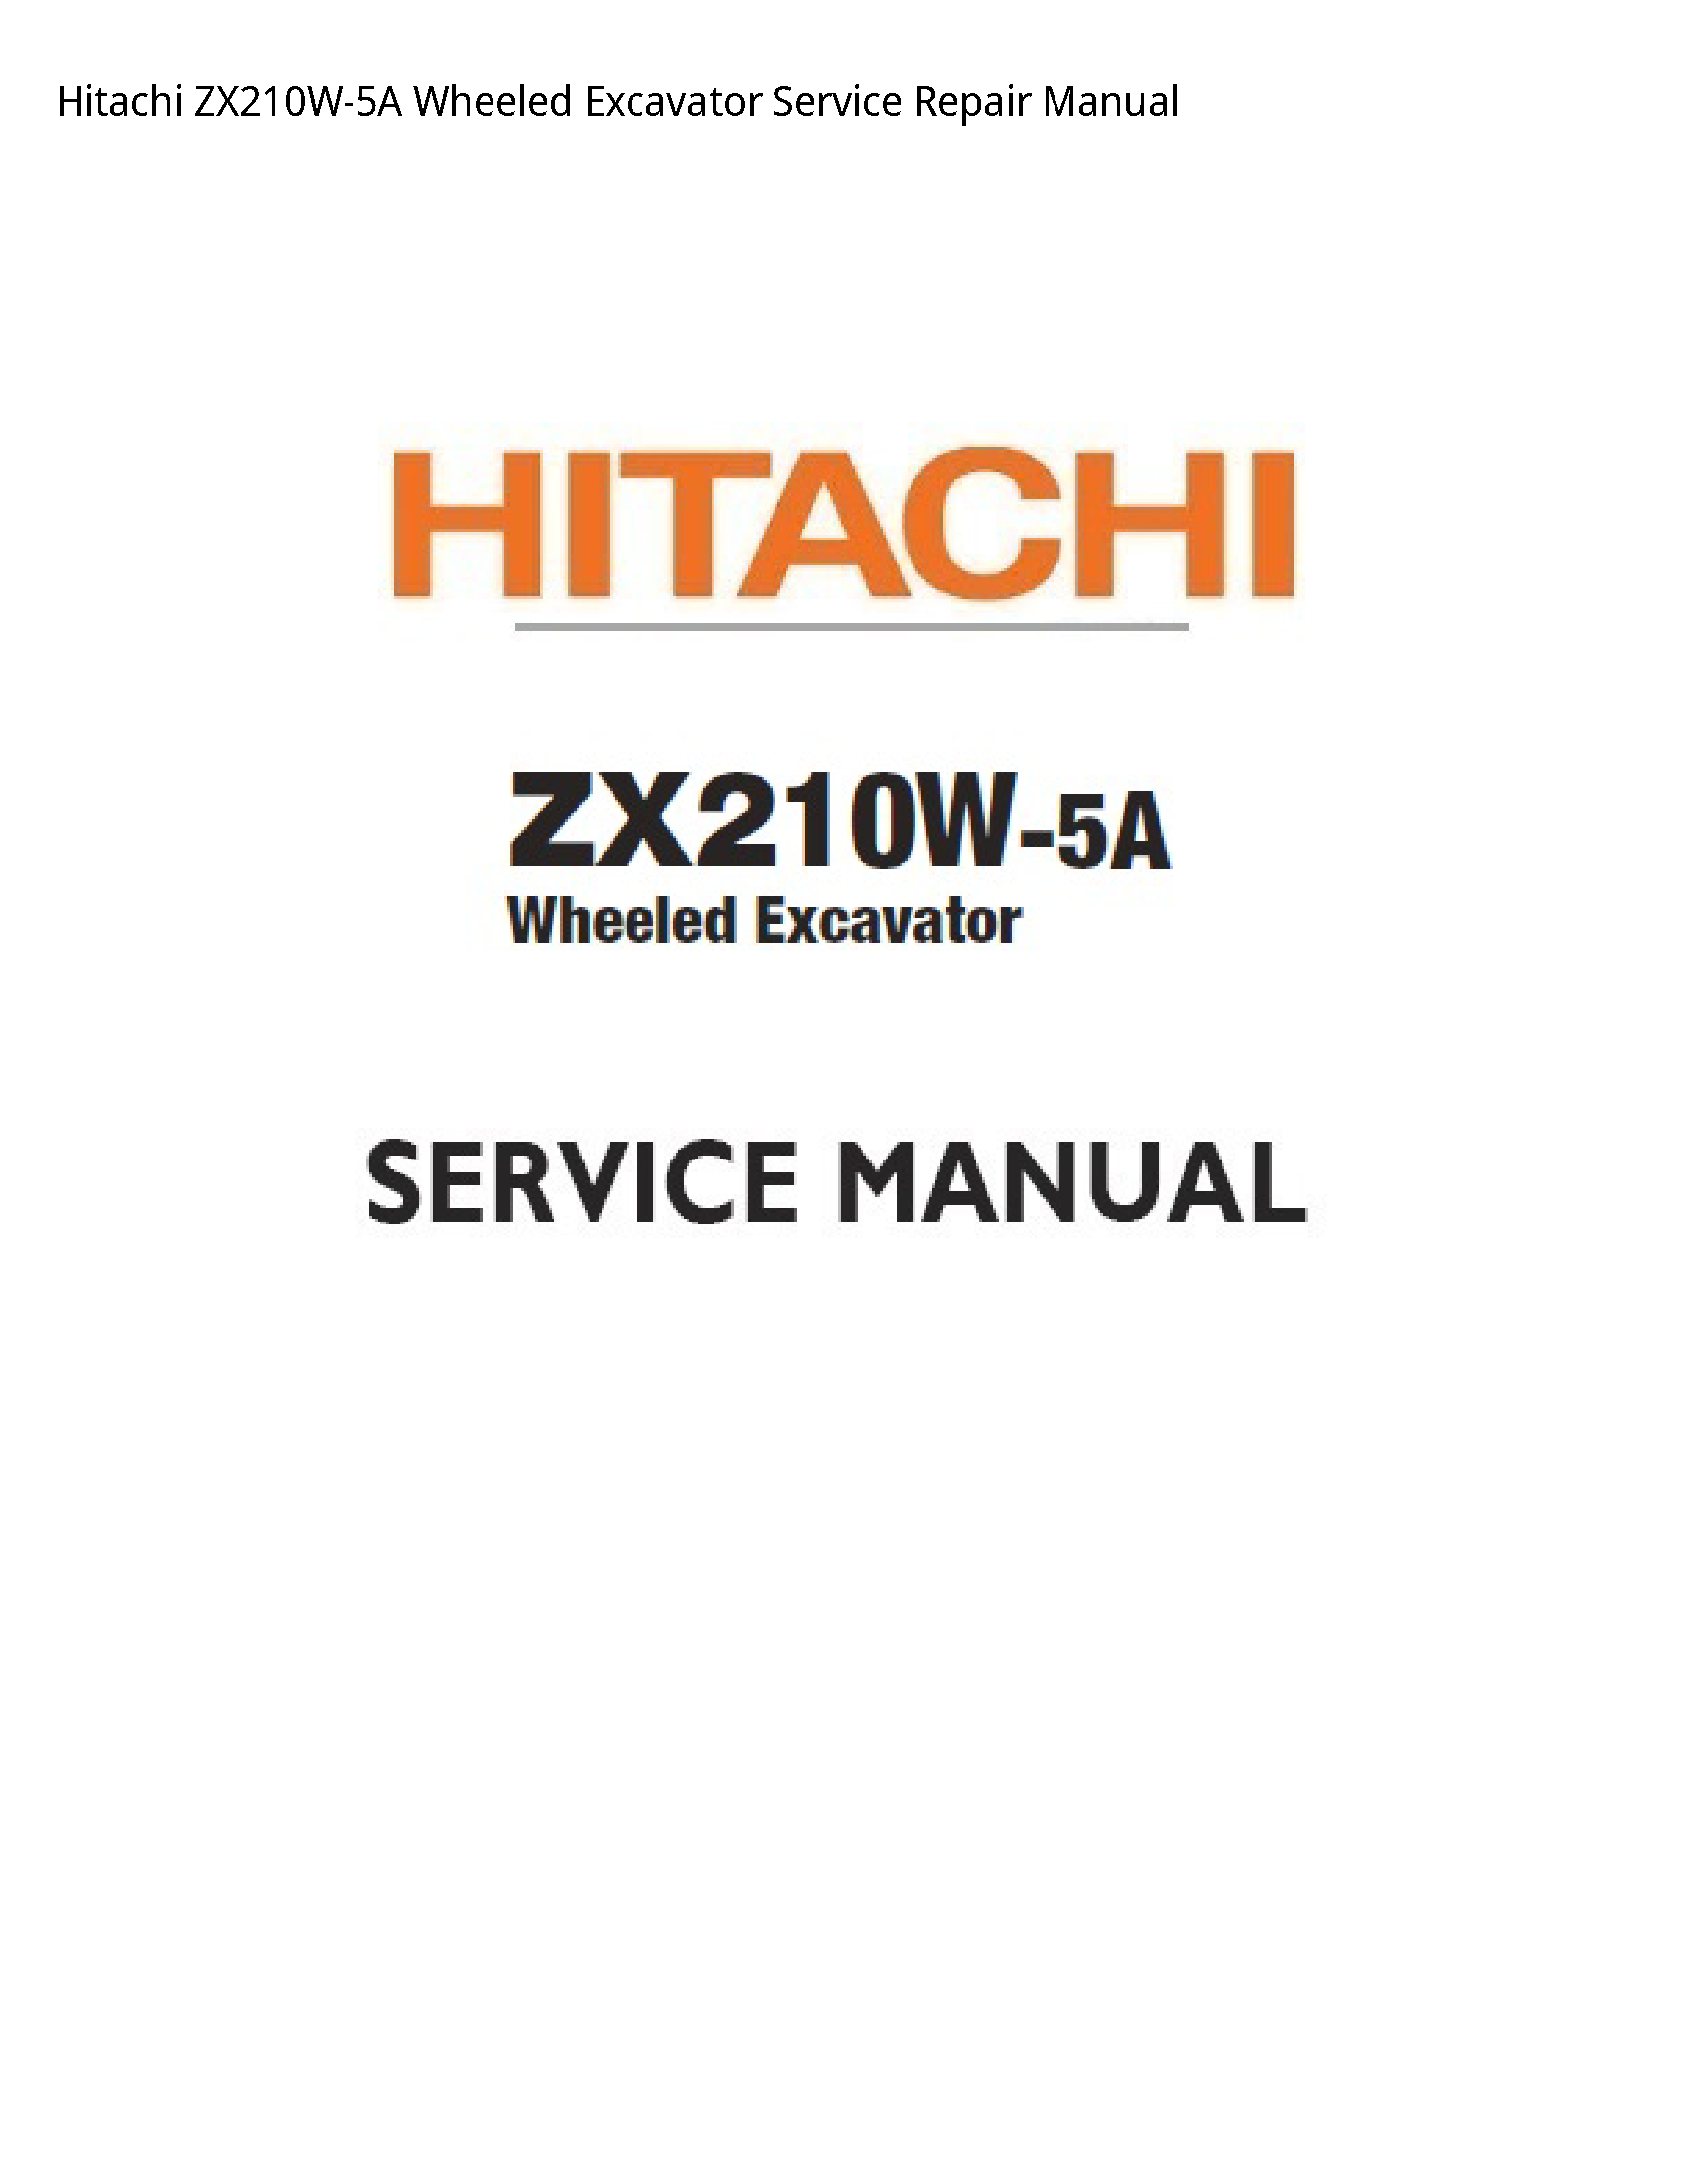 Hitachi ZX210W-5A Wheeled Excavator manual